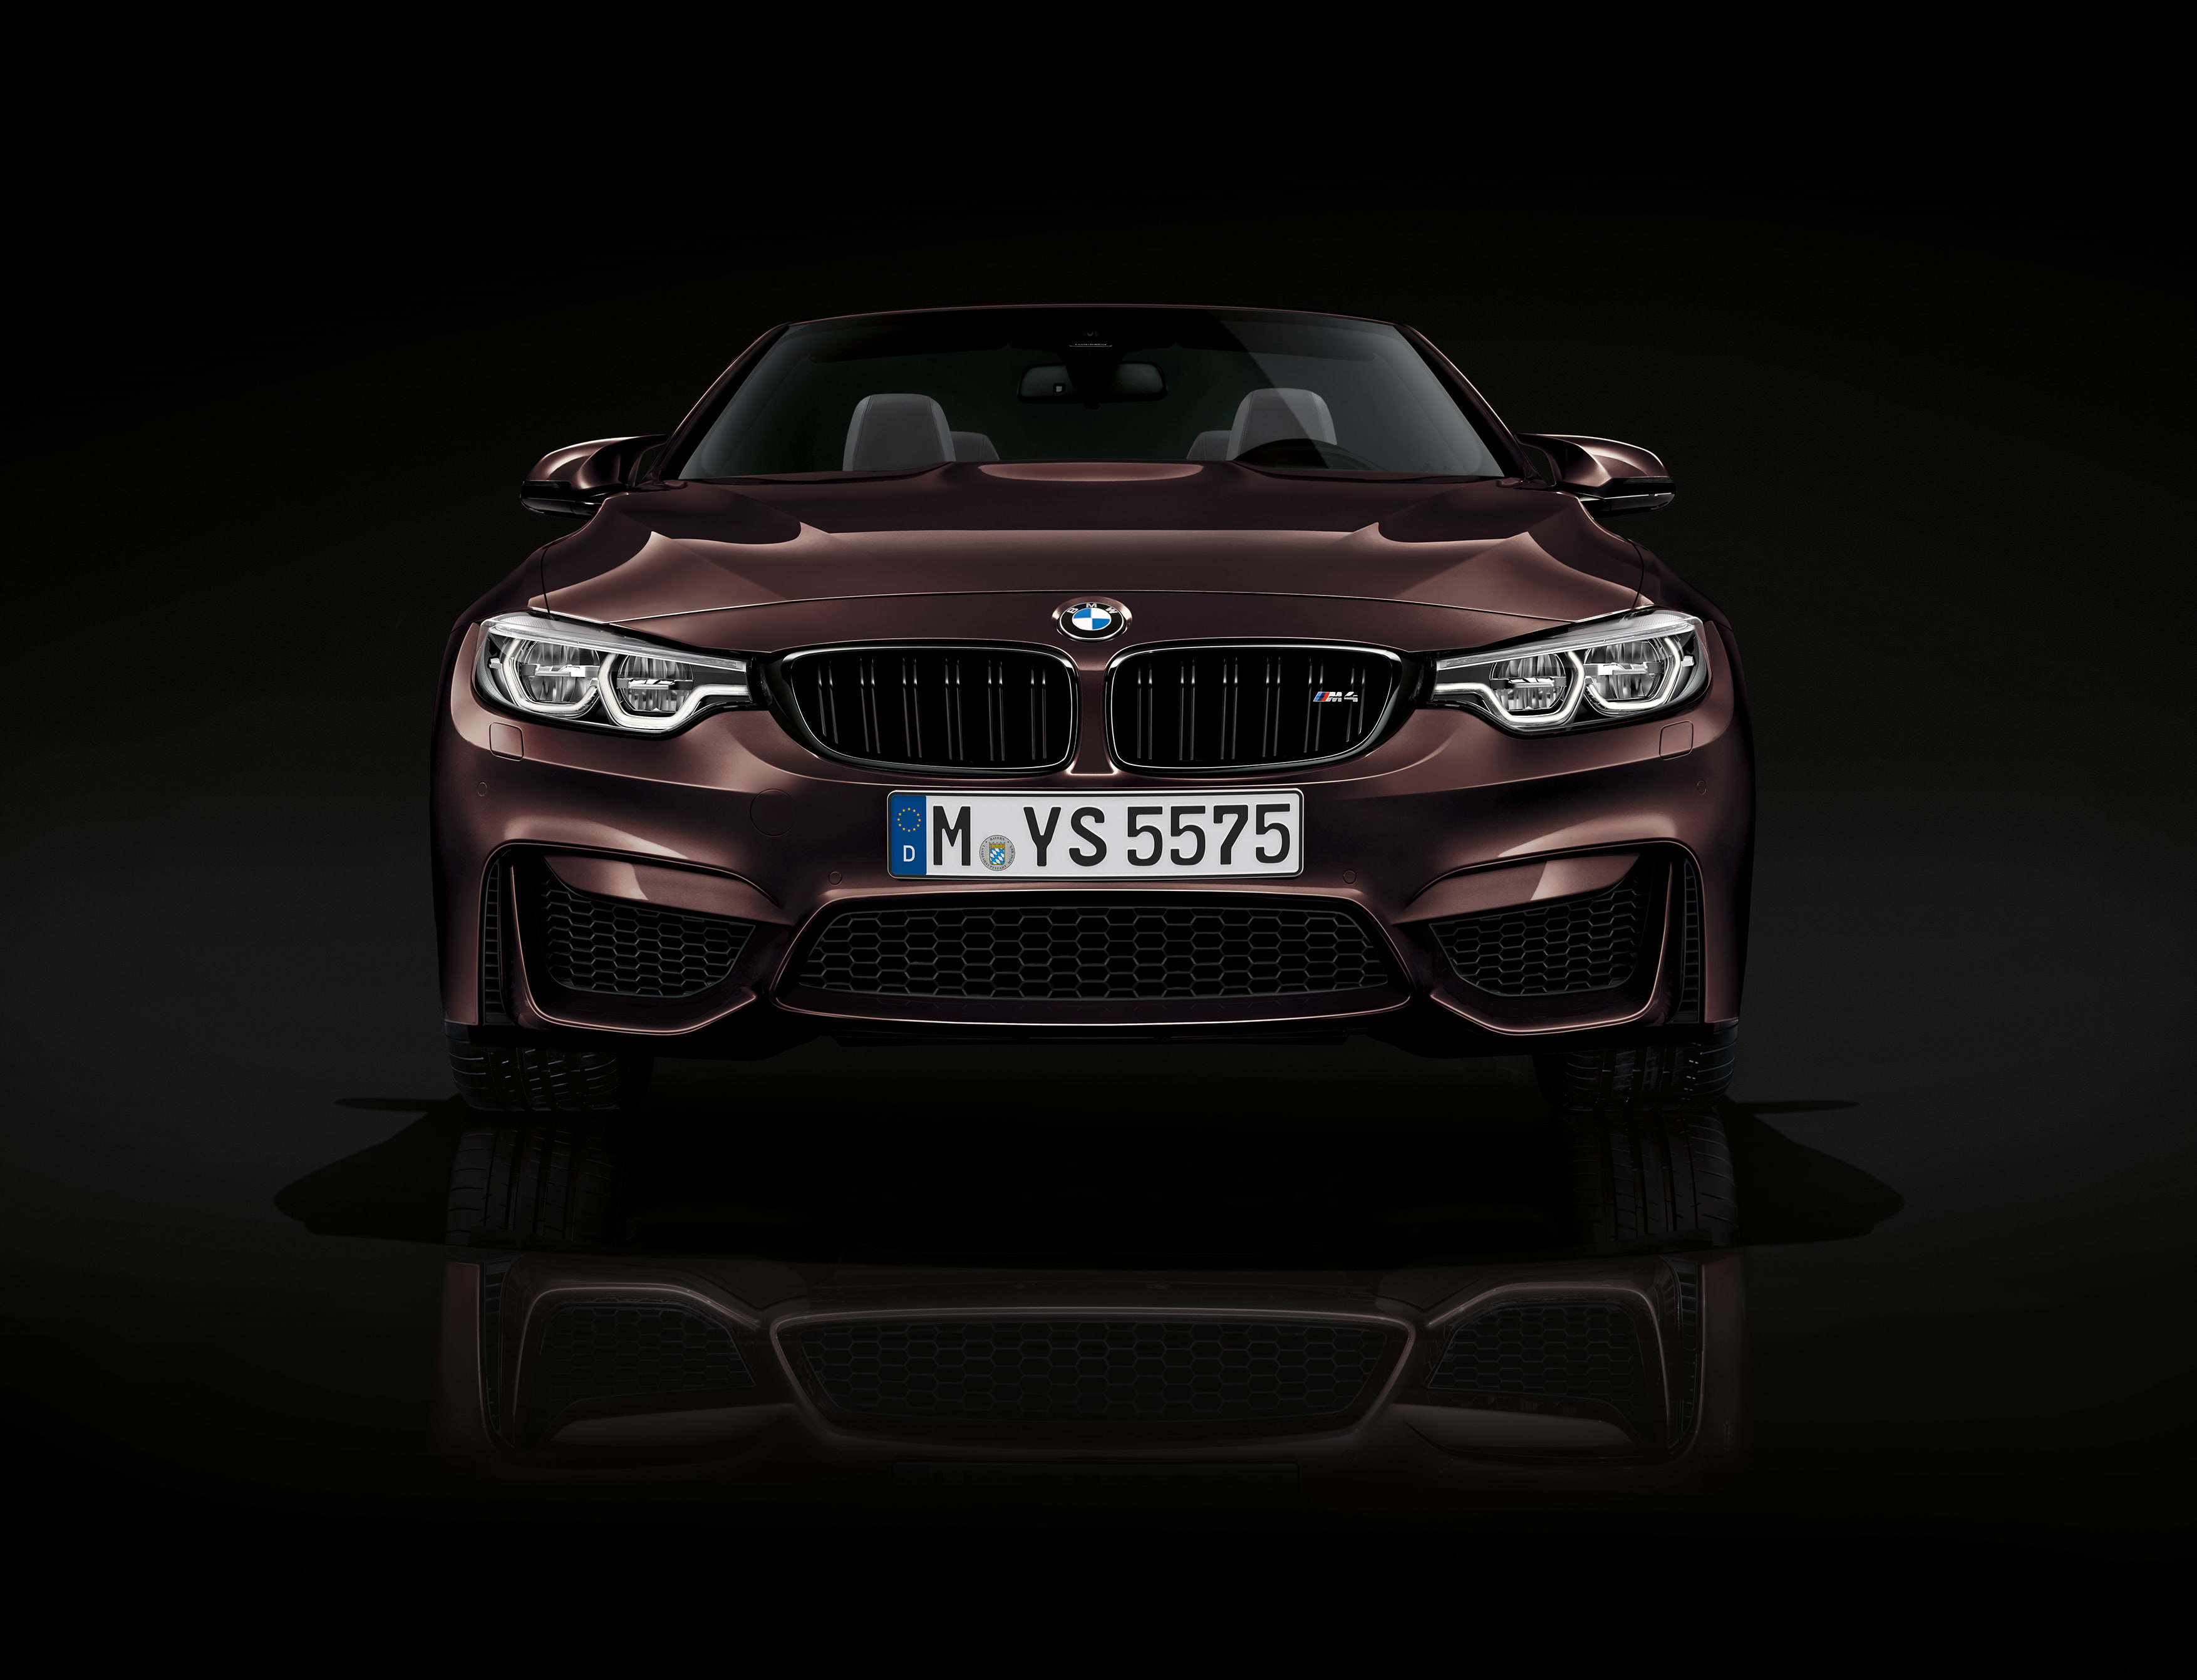 Cabrio, M4, BMW, 2017, car, motor vehicle, studio shot, black background